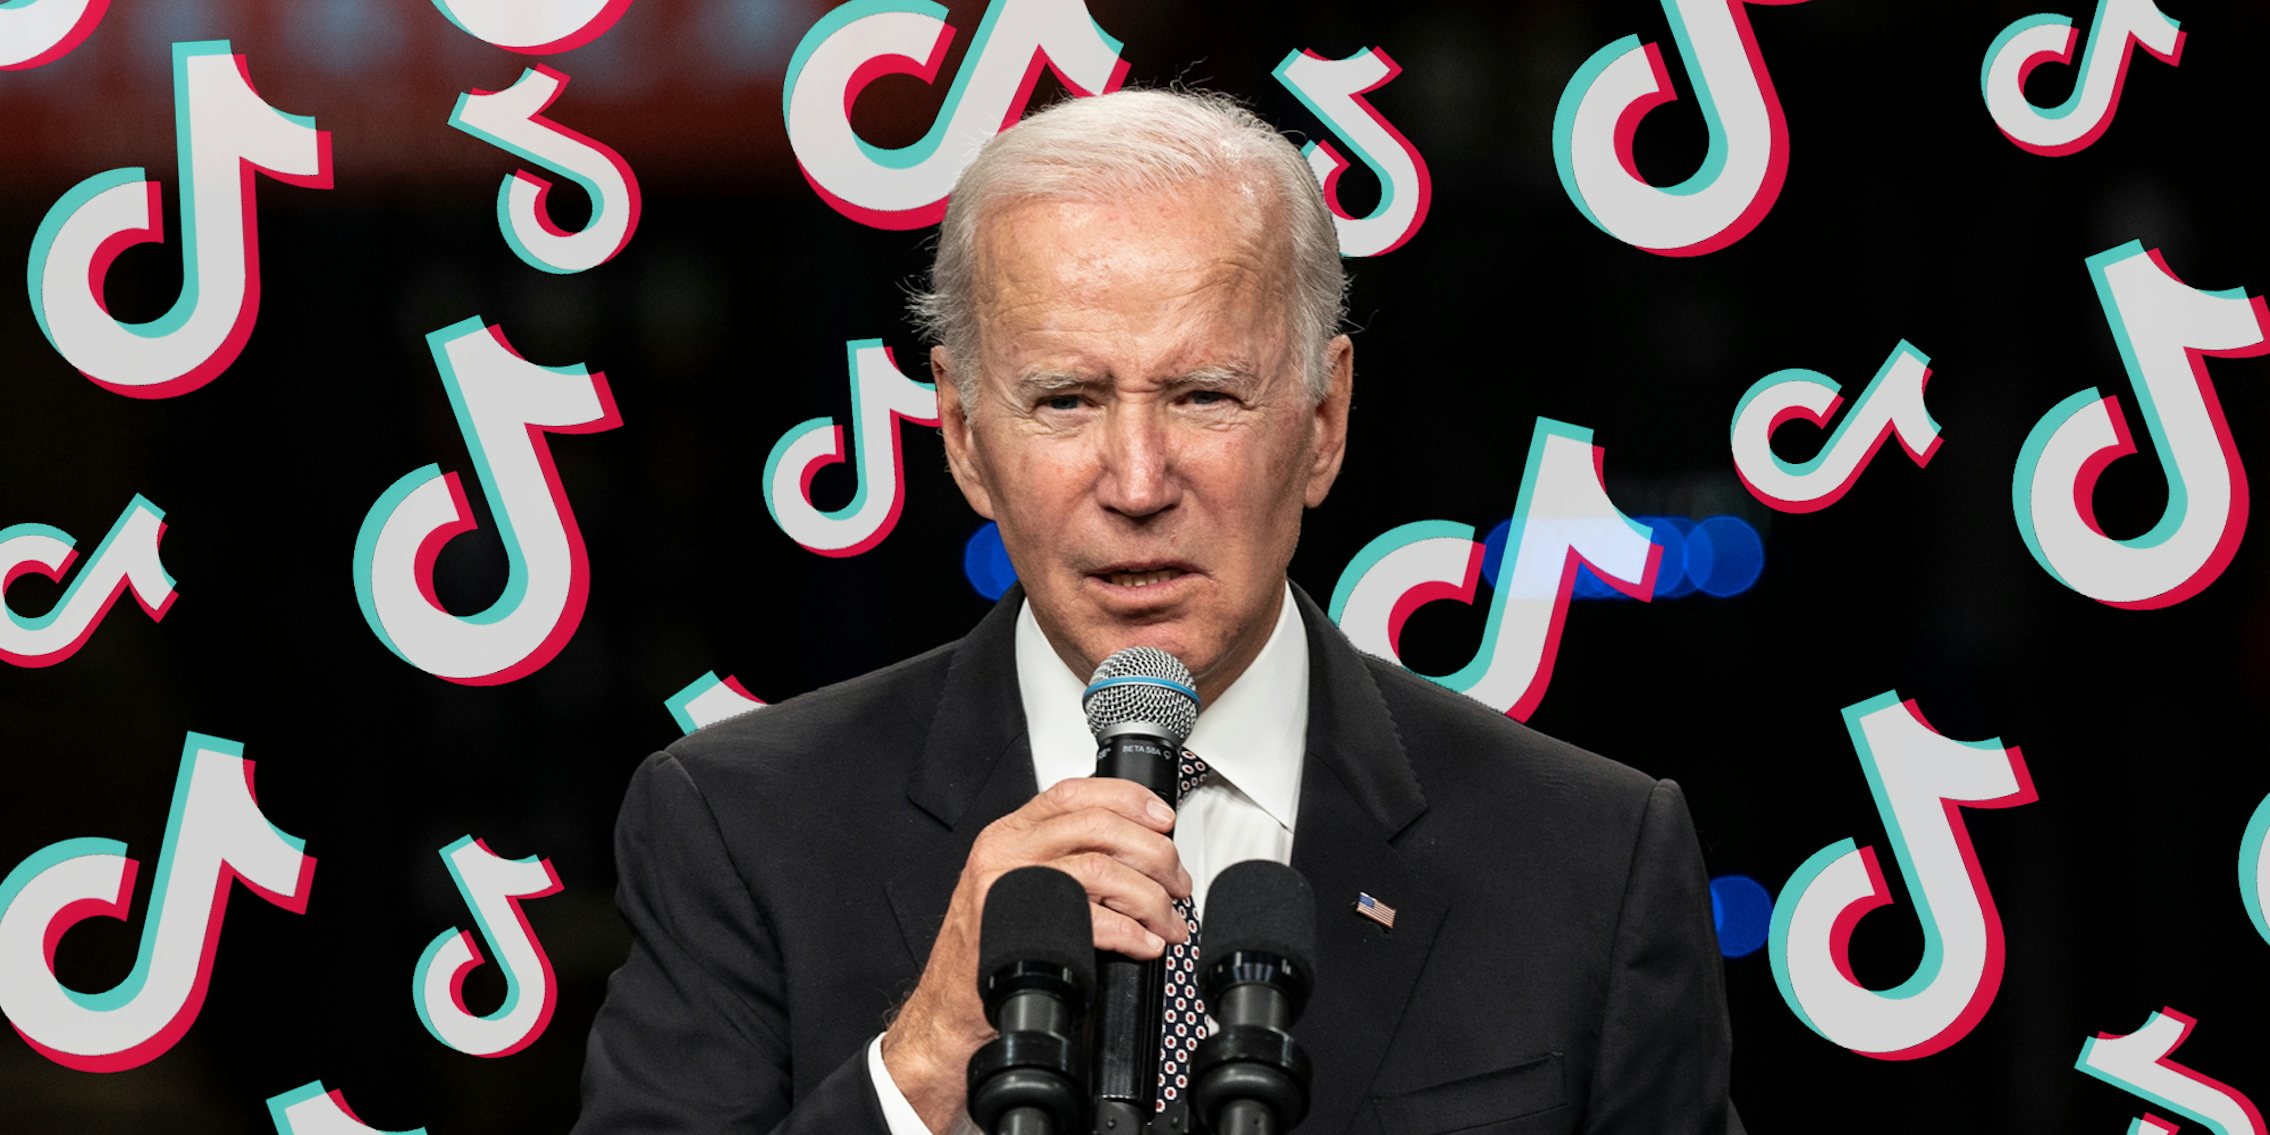 Joe Biden speaking into microphone in front of TikTok logo background